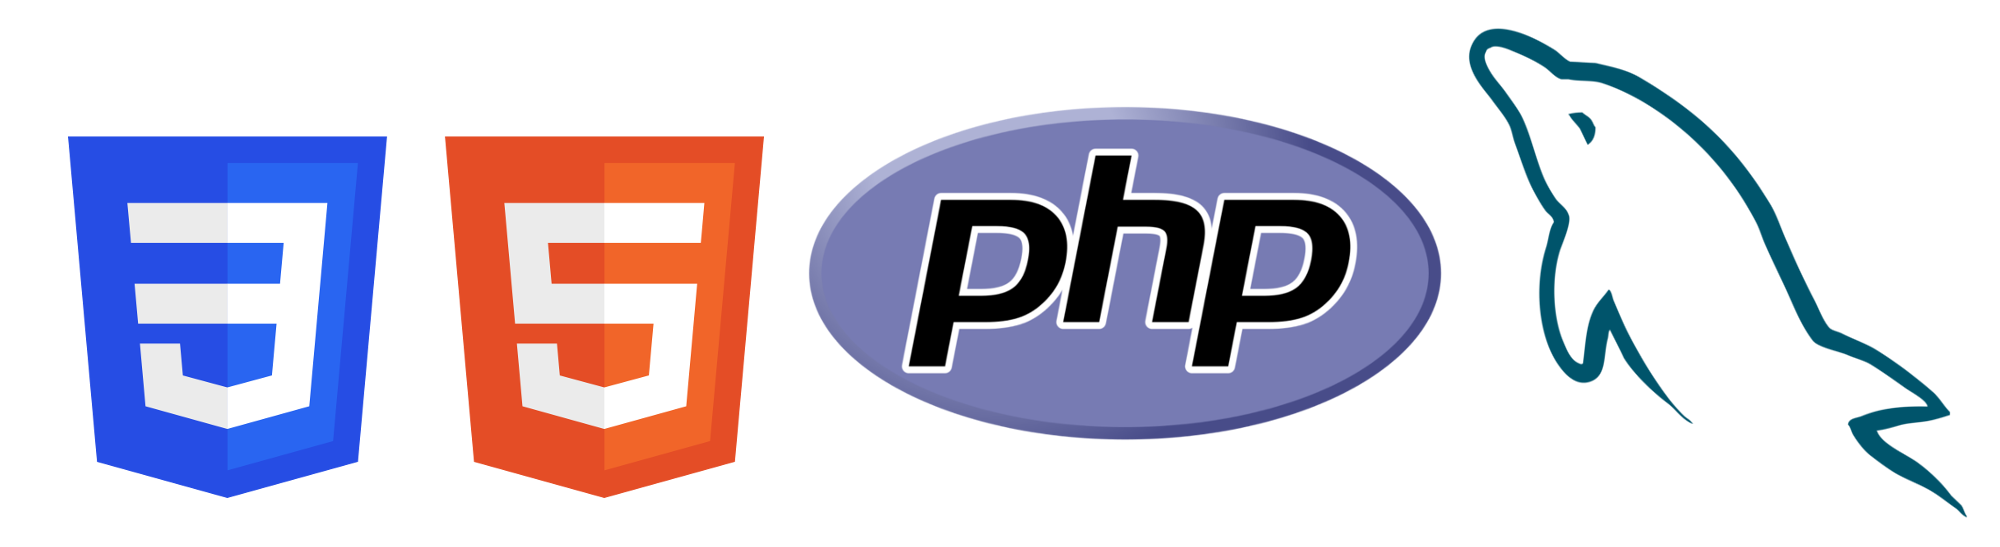 php logo, html css php mysql logo png transparent #20756